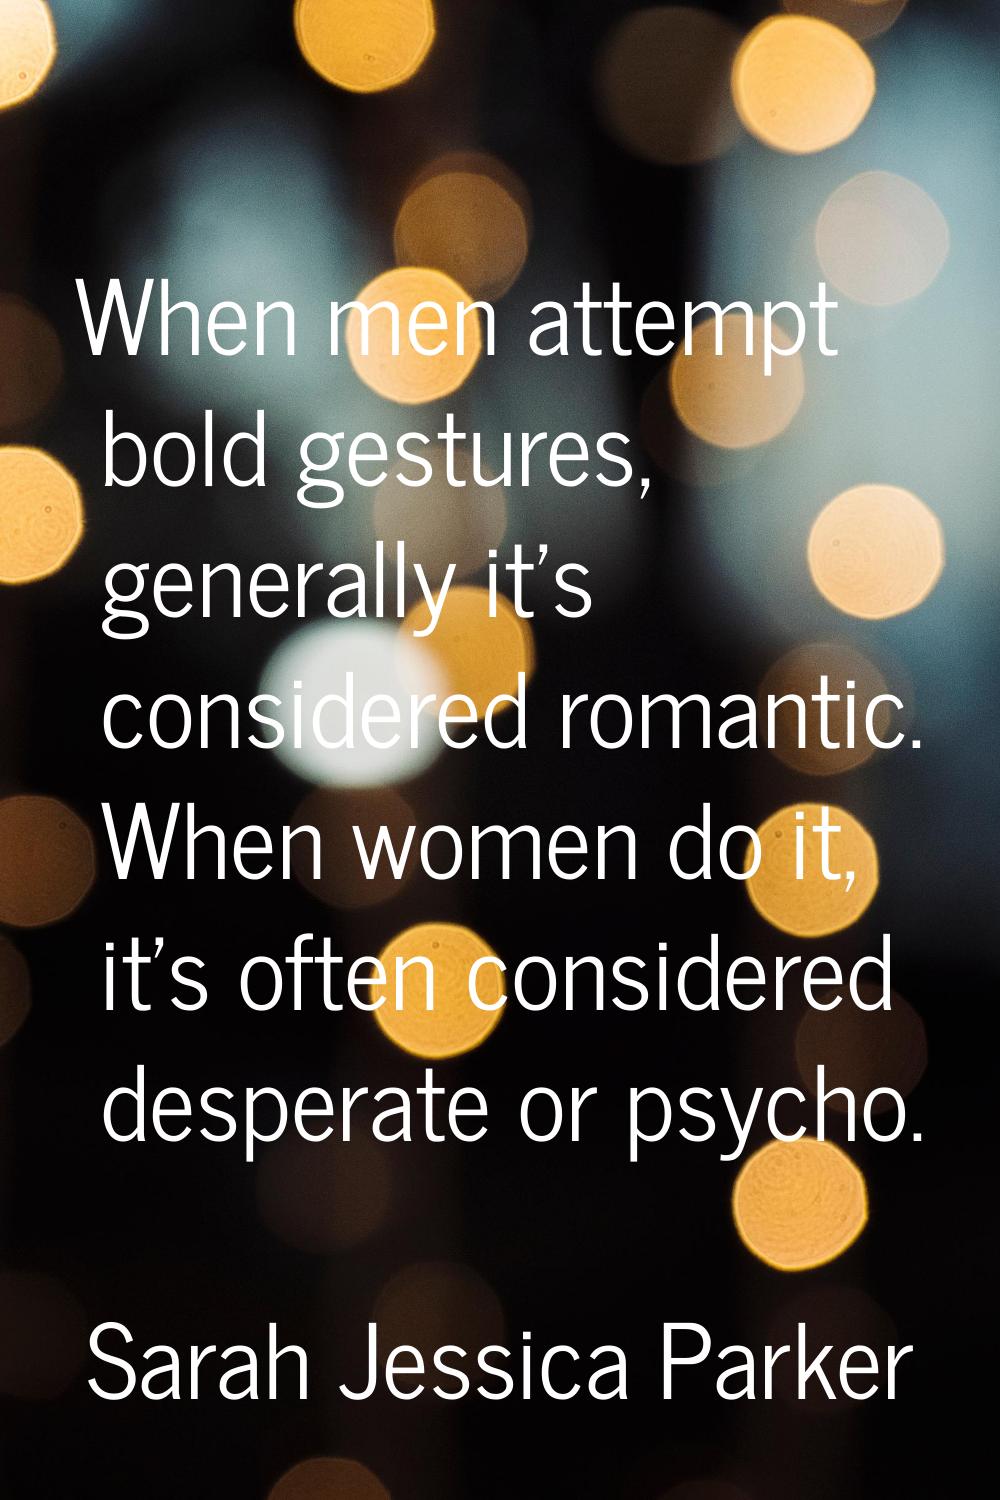 When men attempt bold gestures, generally it's considered romantic. When women do it, it's often co